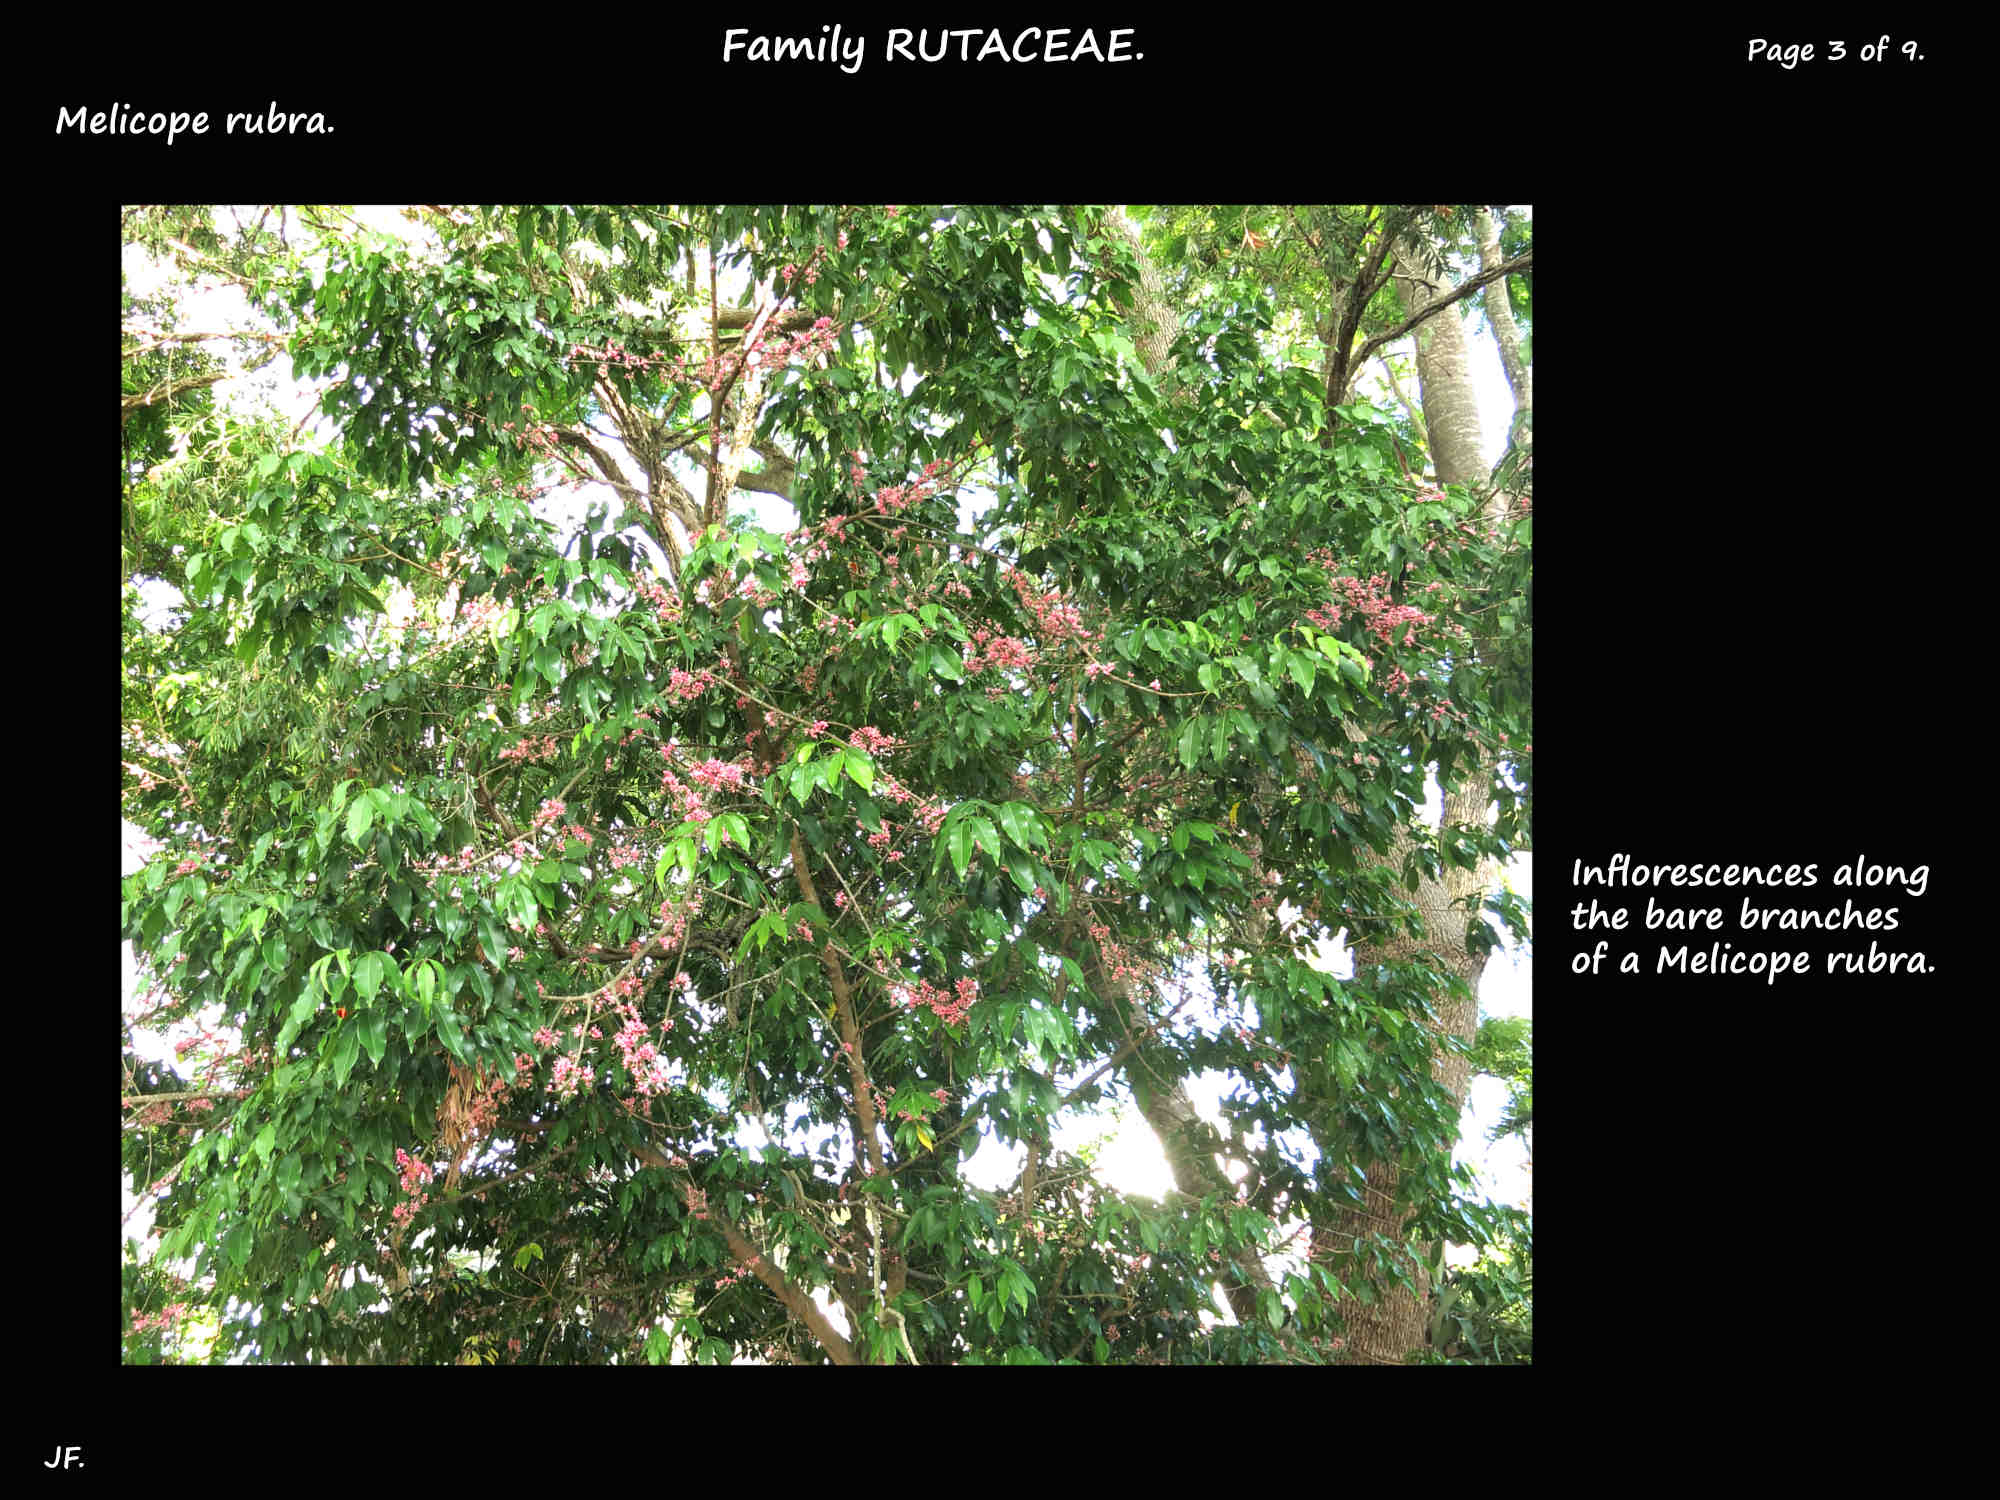 3 A flowering Melicope rubra tree